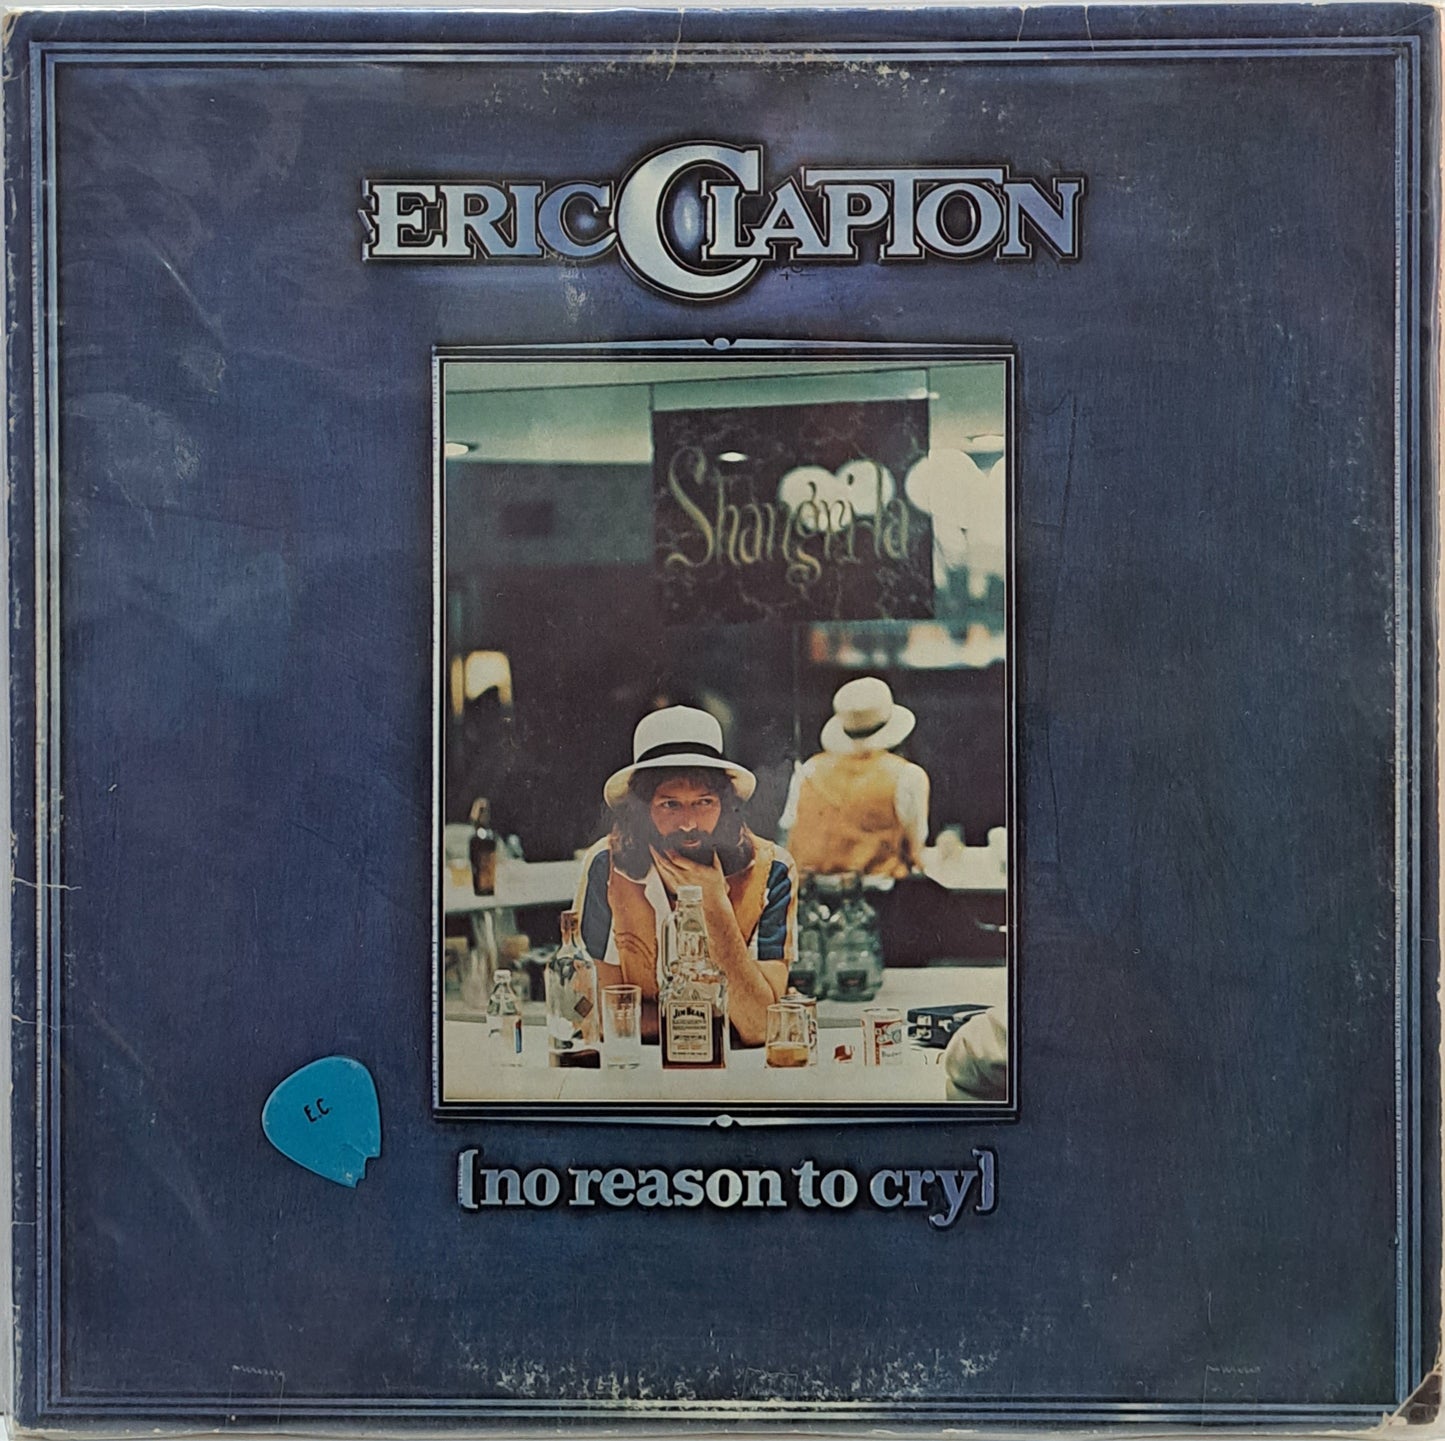 ERIC CLAPTON - NO REASON TO CRY LP